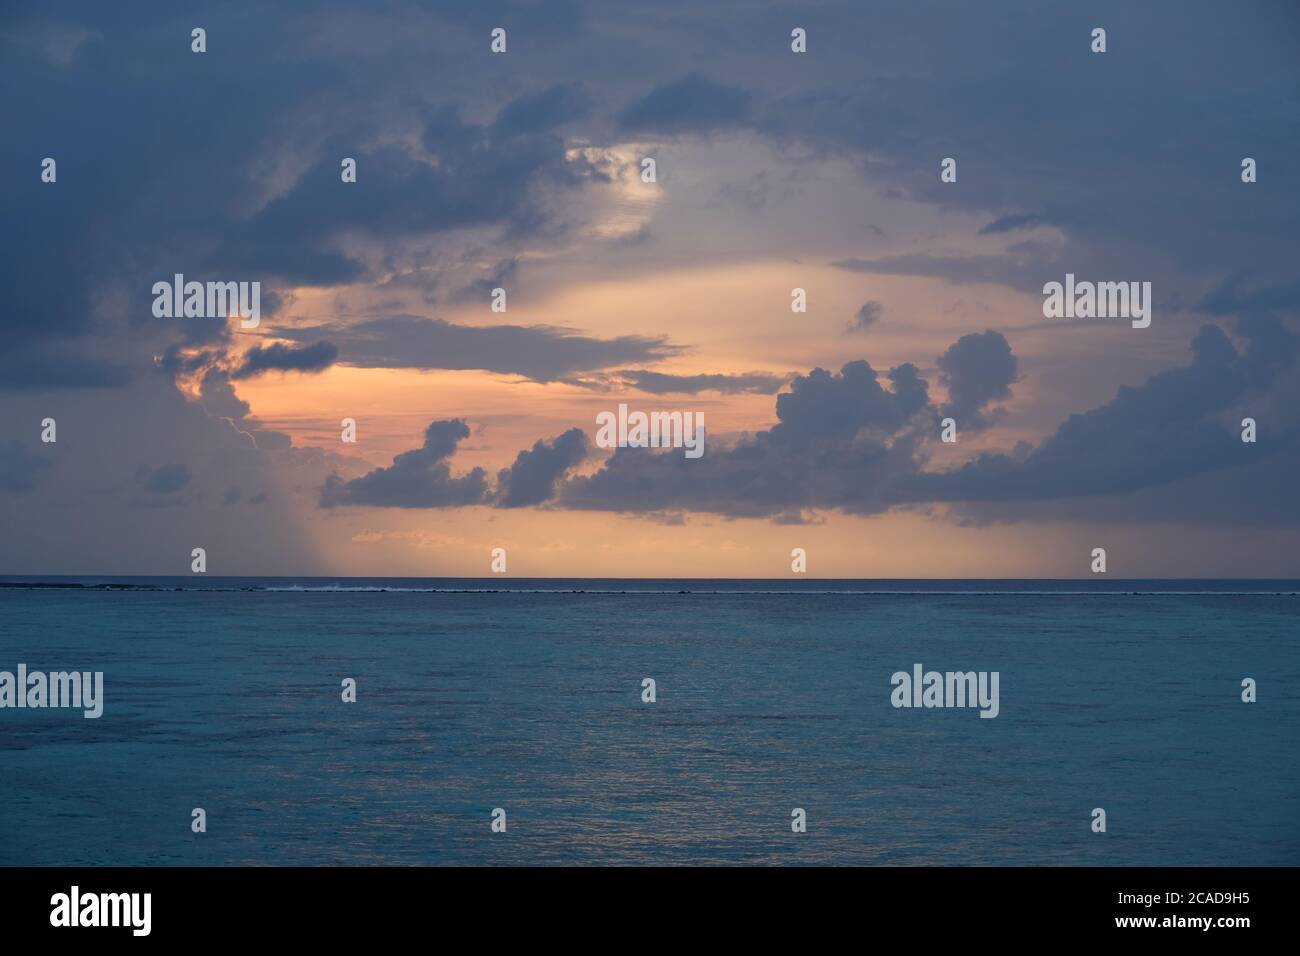 orange sunrise in cloudy blue sky of maldives. Blue peaceful ocean waves on horizon Stock Photo